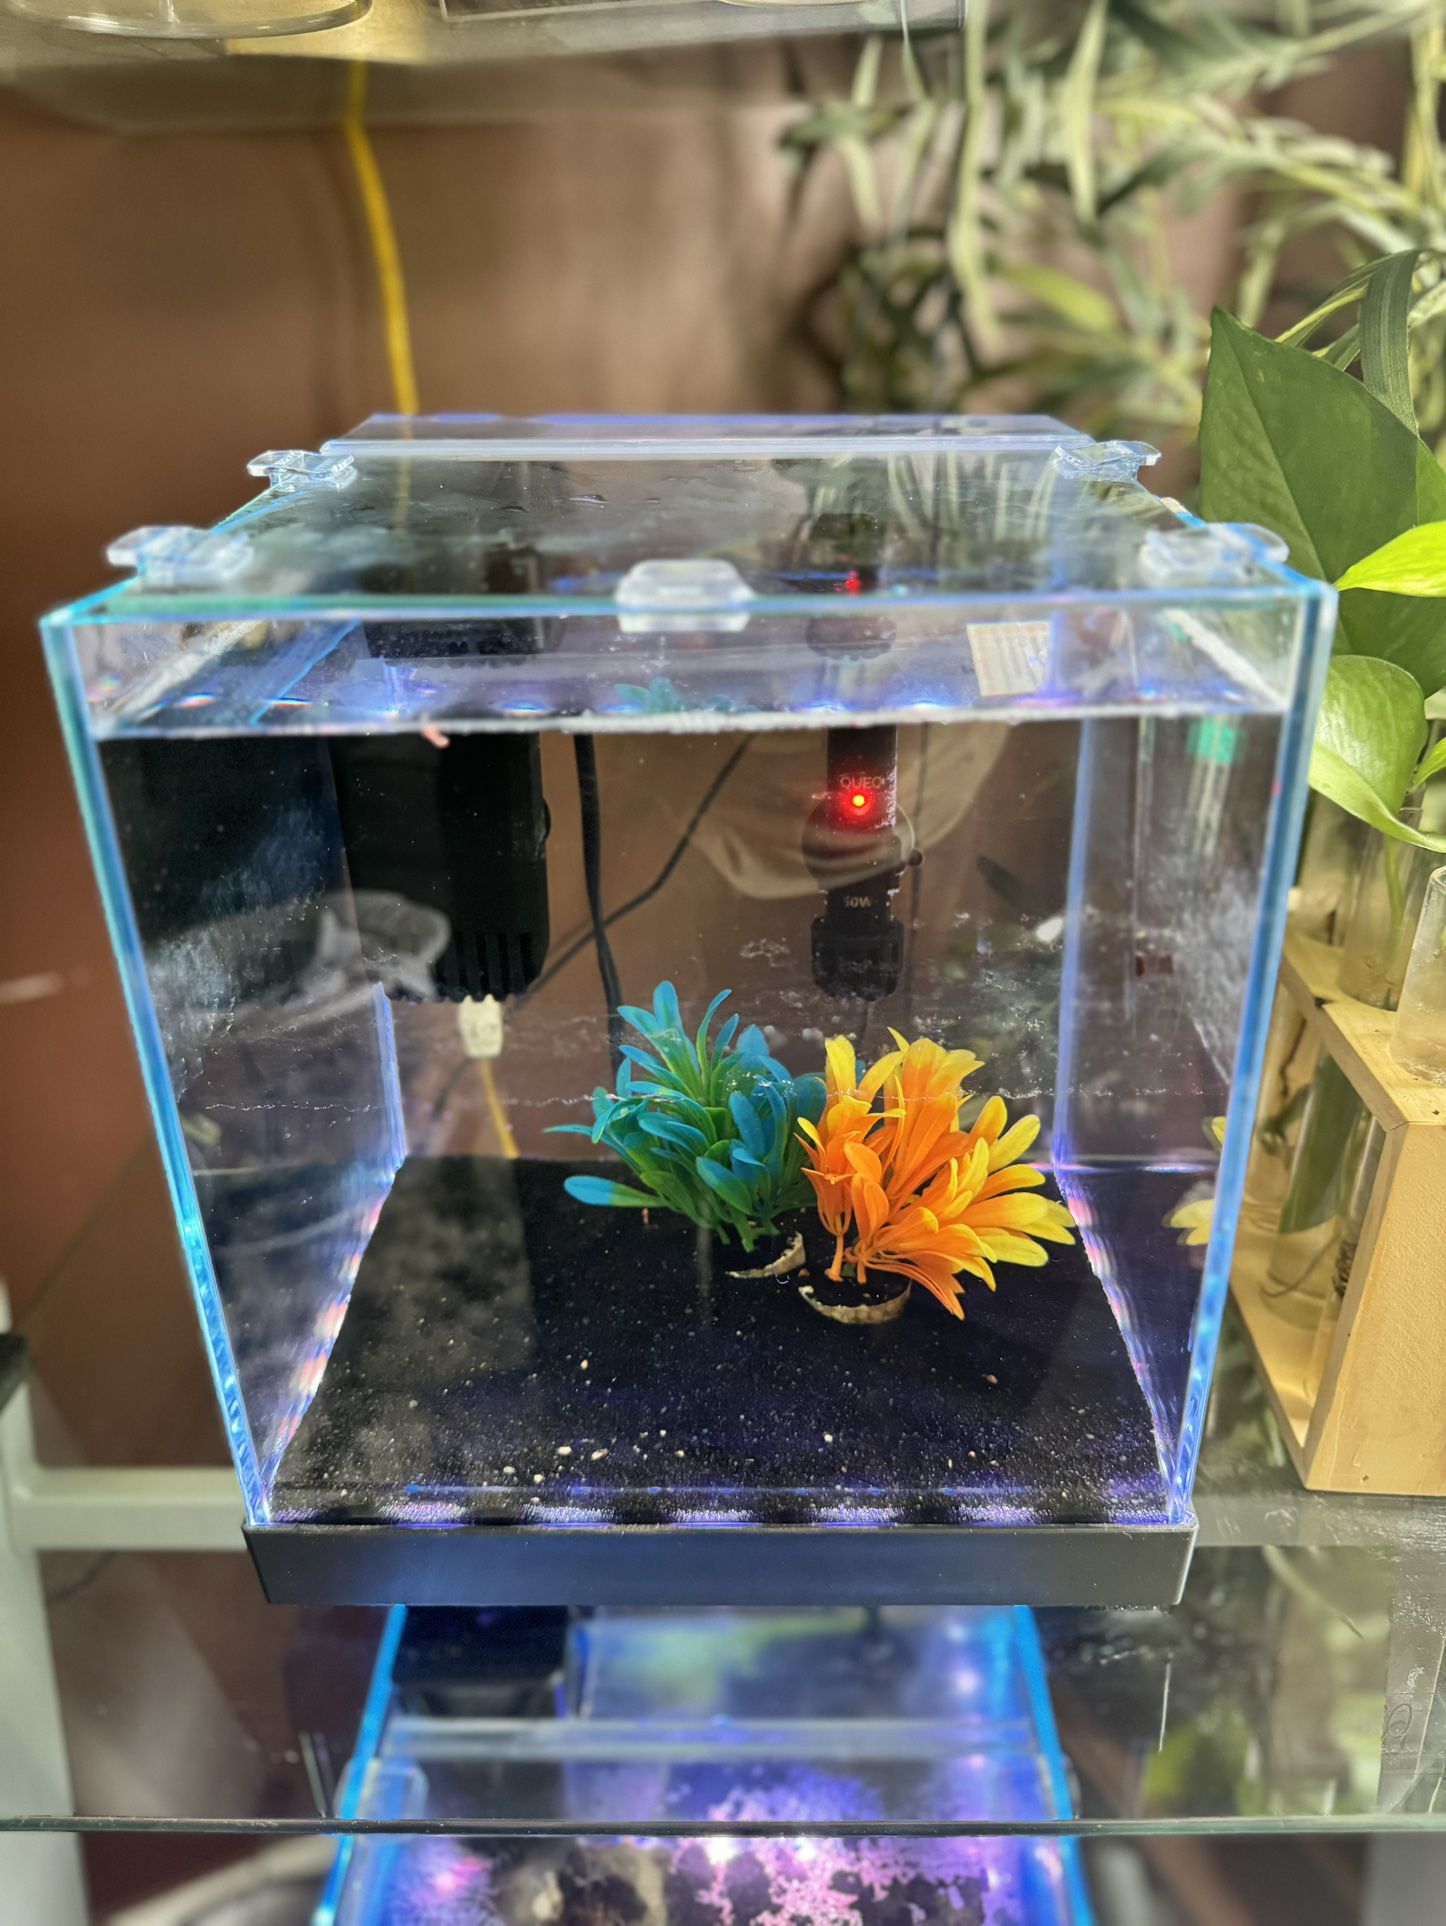 Colored Male Betta Fish (including Aquarium, Heater, And Filter)